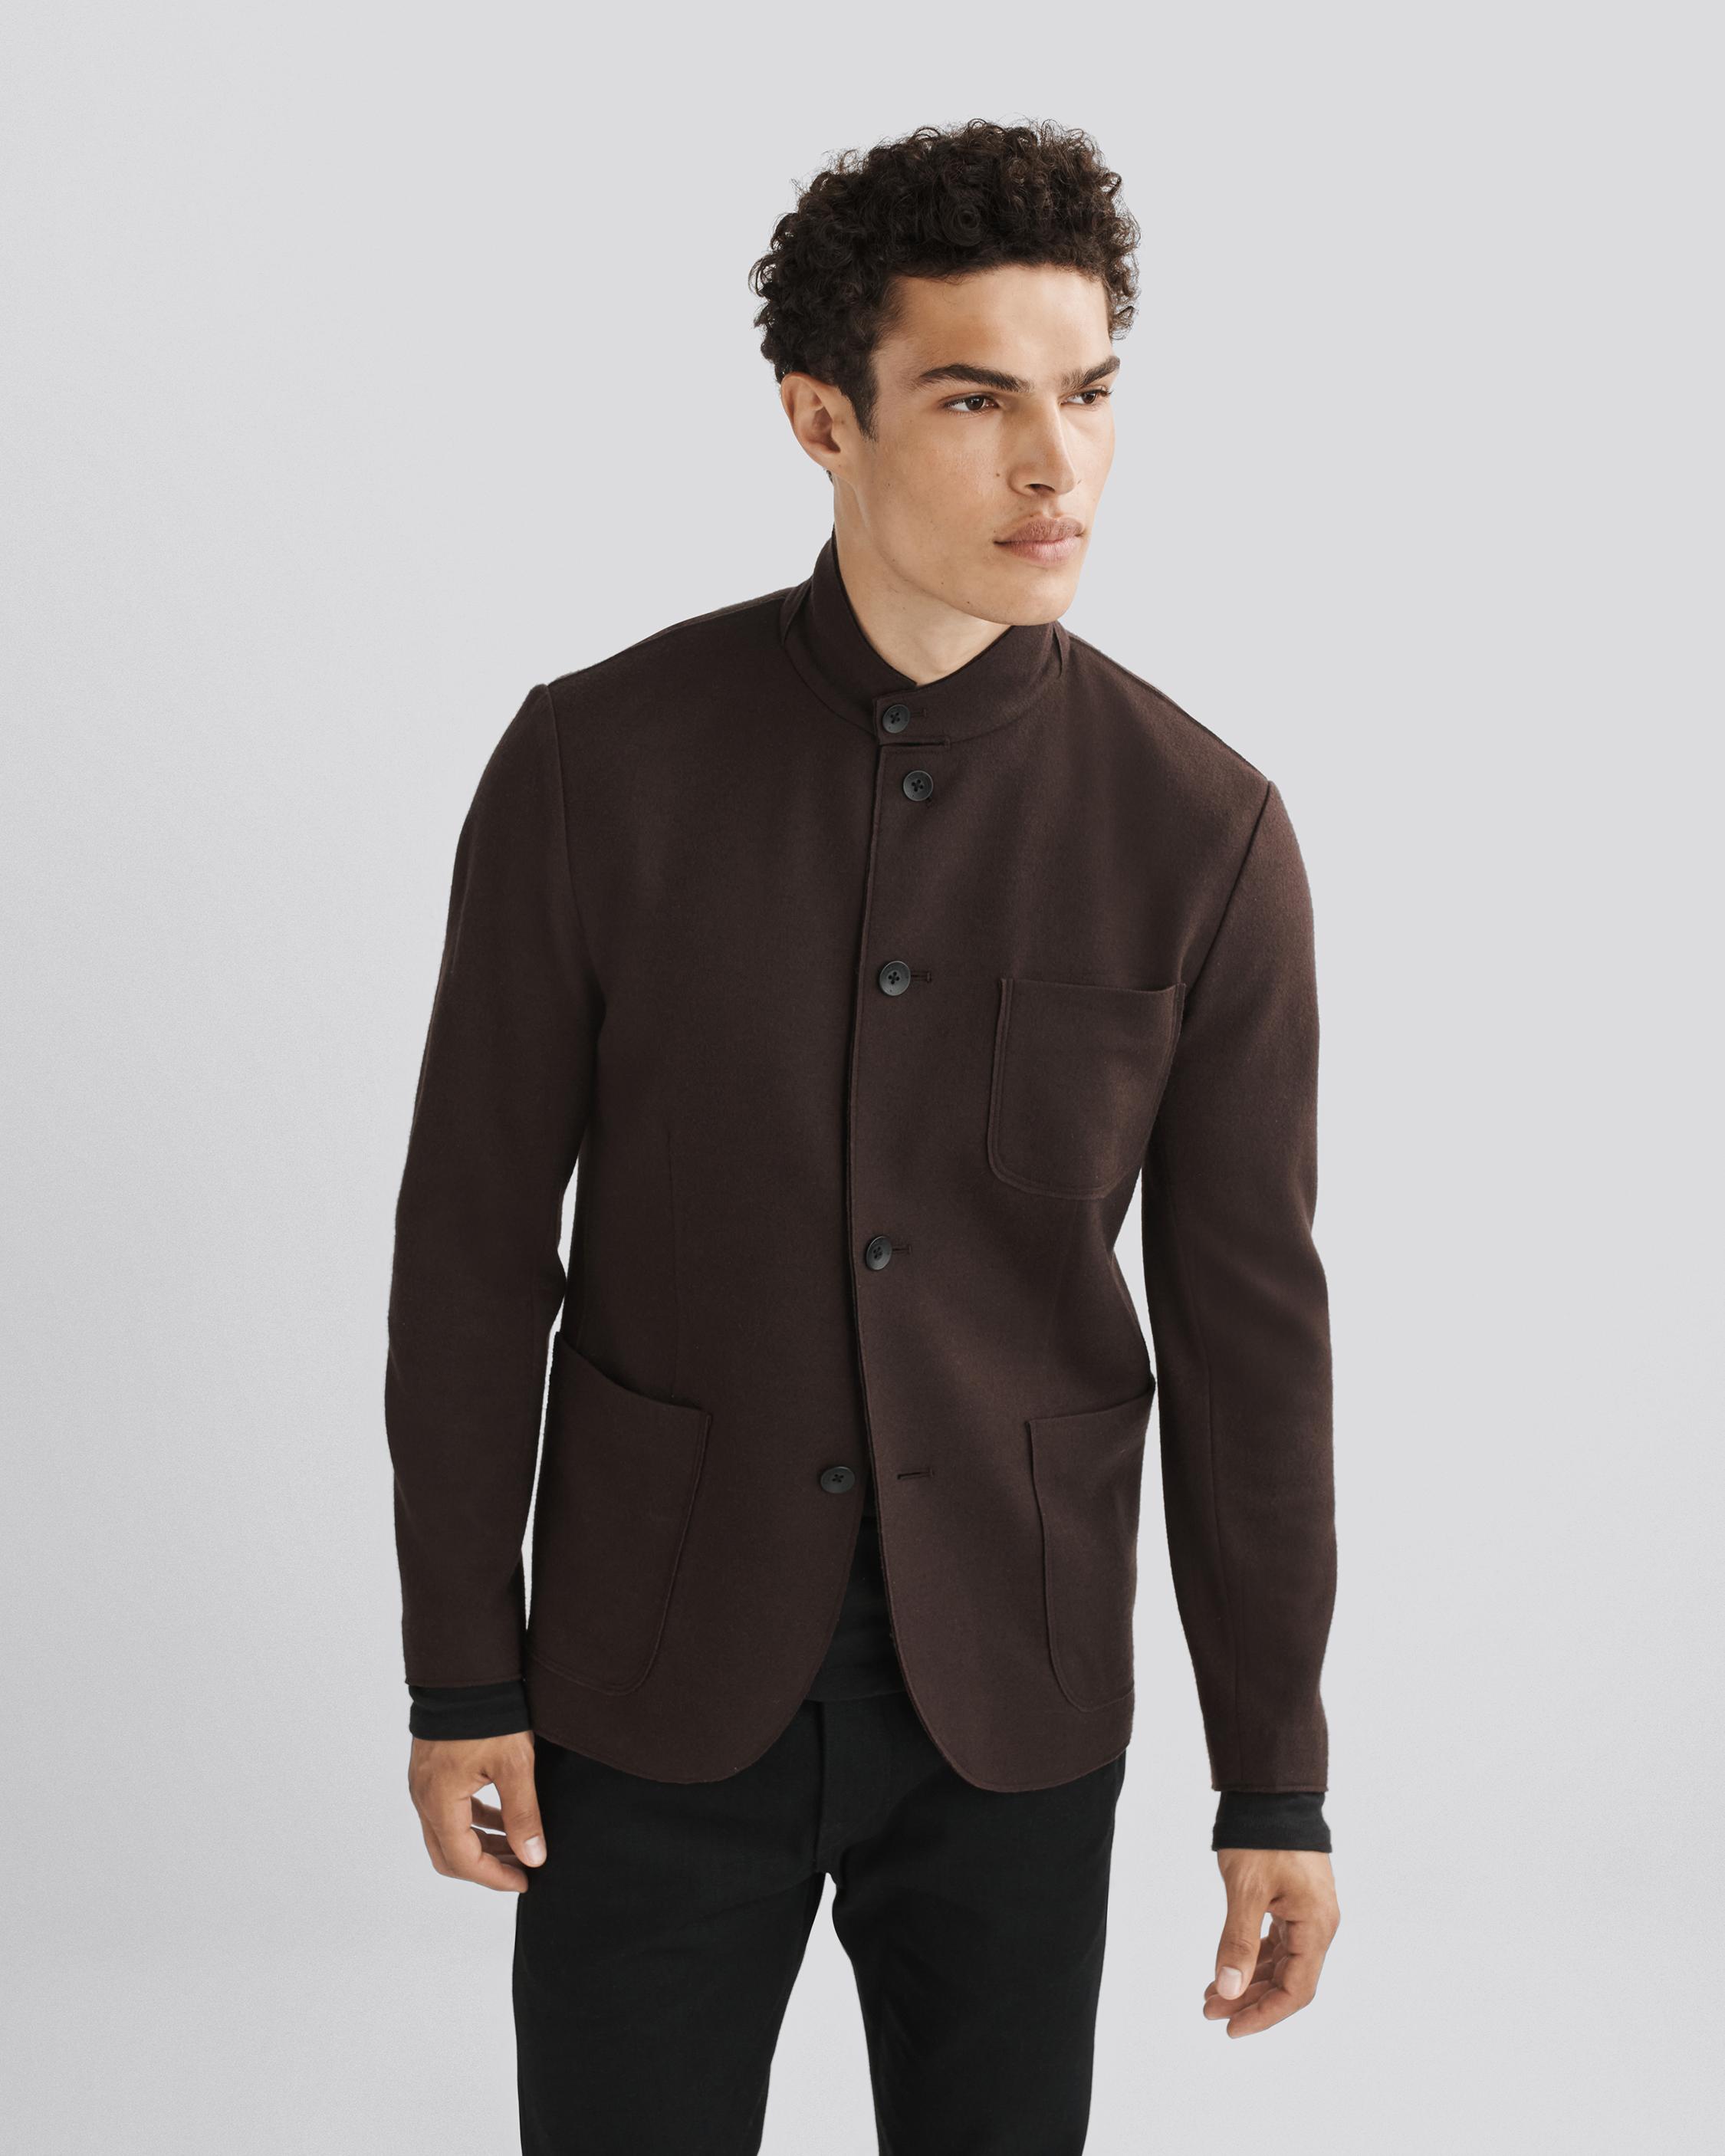 Shop Blazers for Men in Sleek, Modern Styles | rag & bone